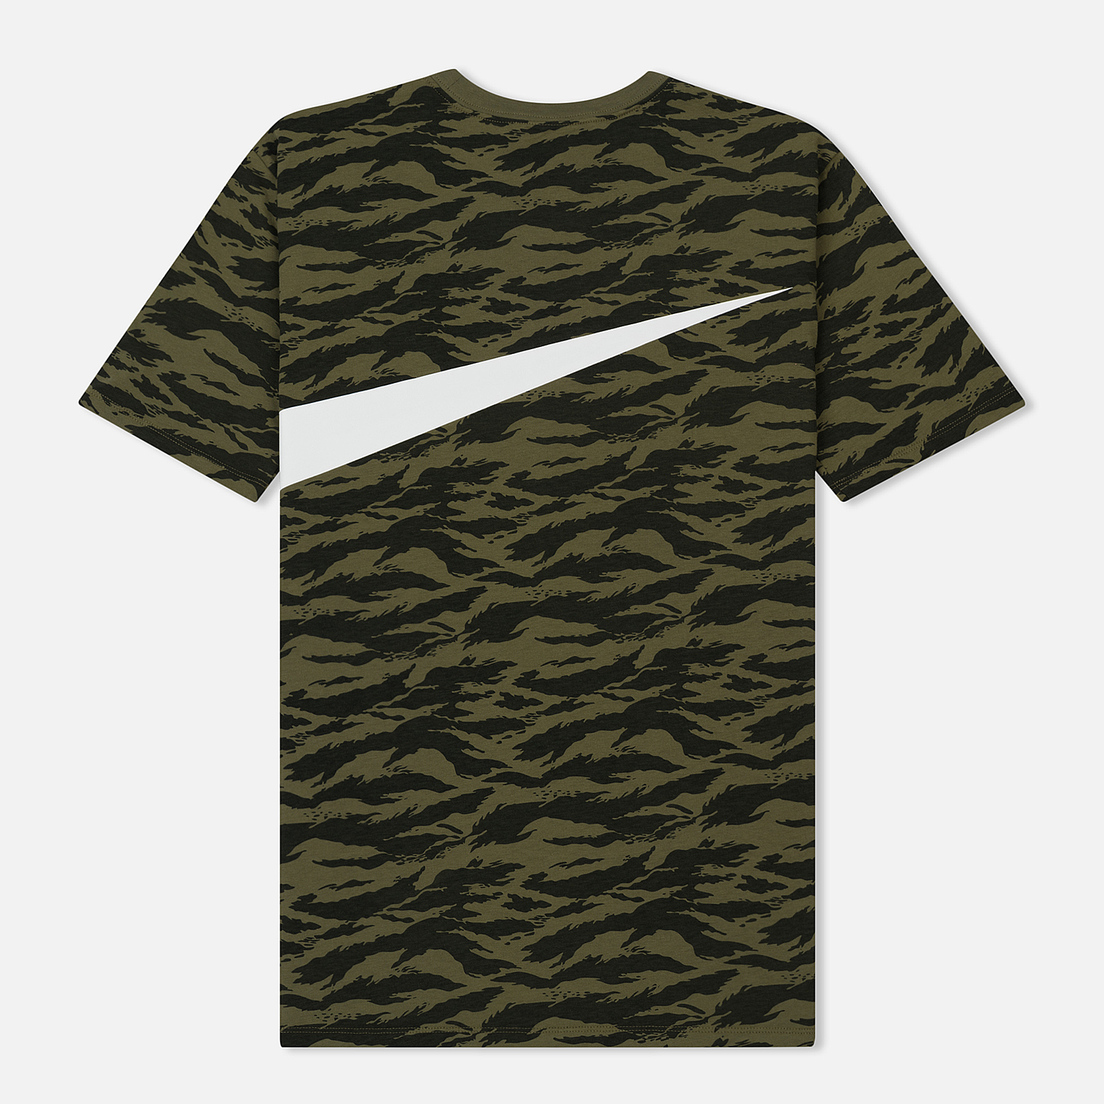 Nike Мужская футболка Swoosh All Over Print